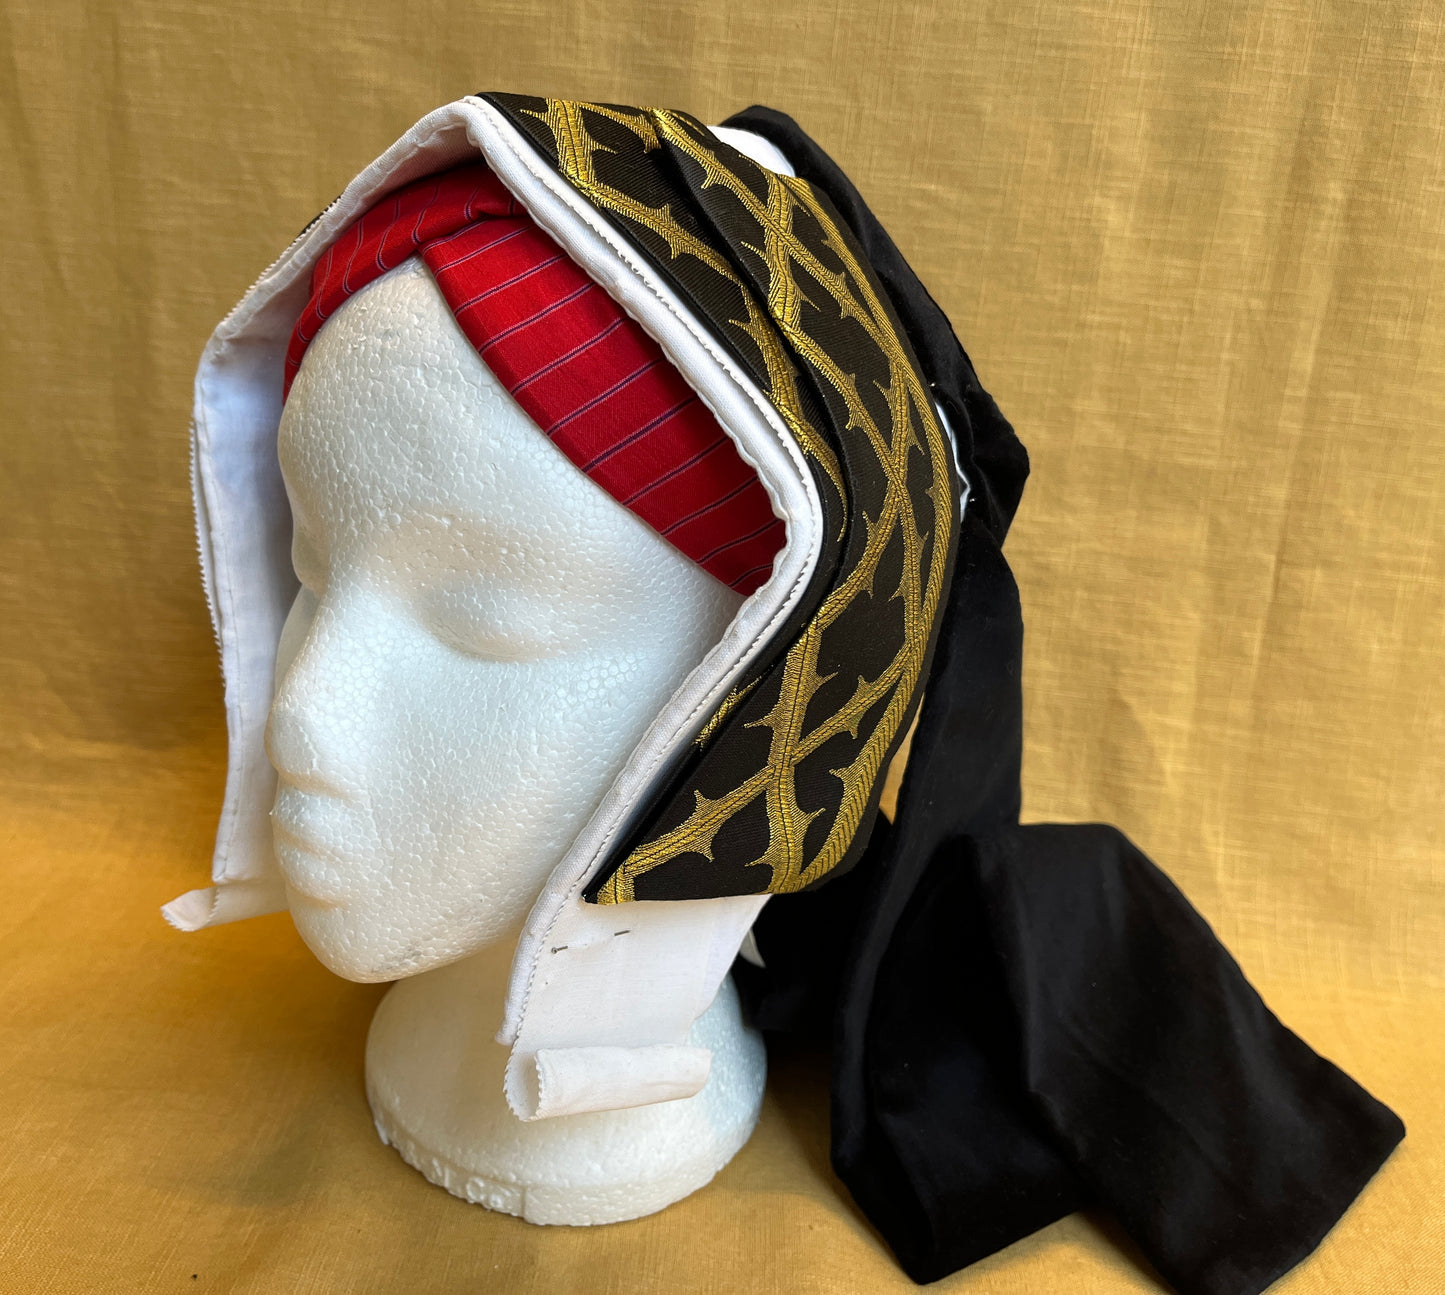 Kit for making a Henrician lady's bonnet & frontlet